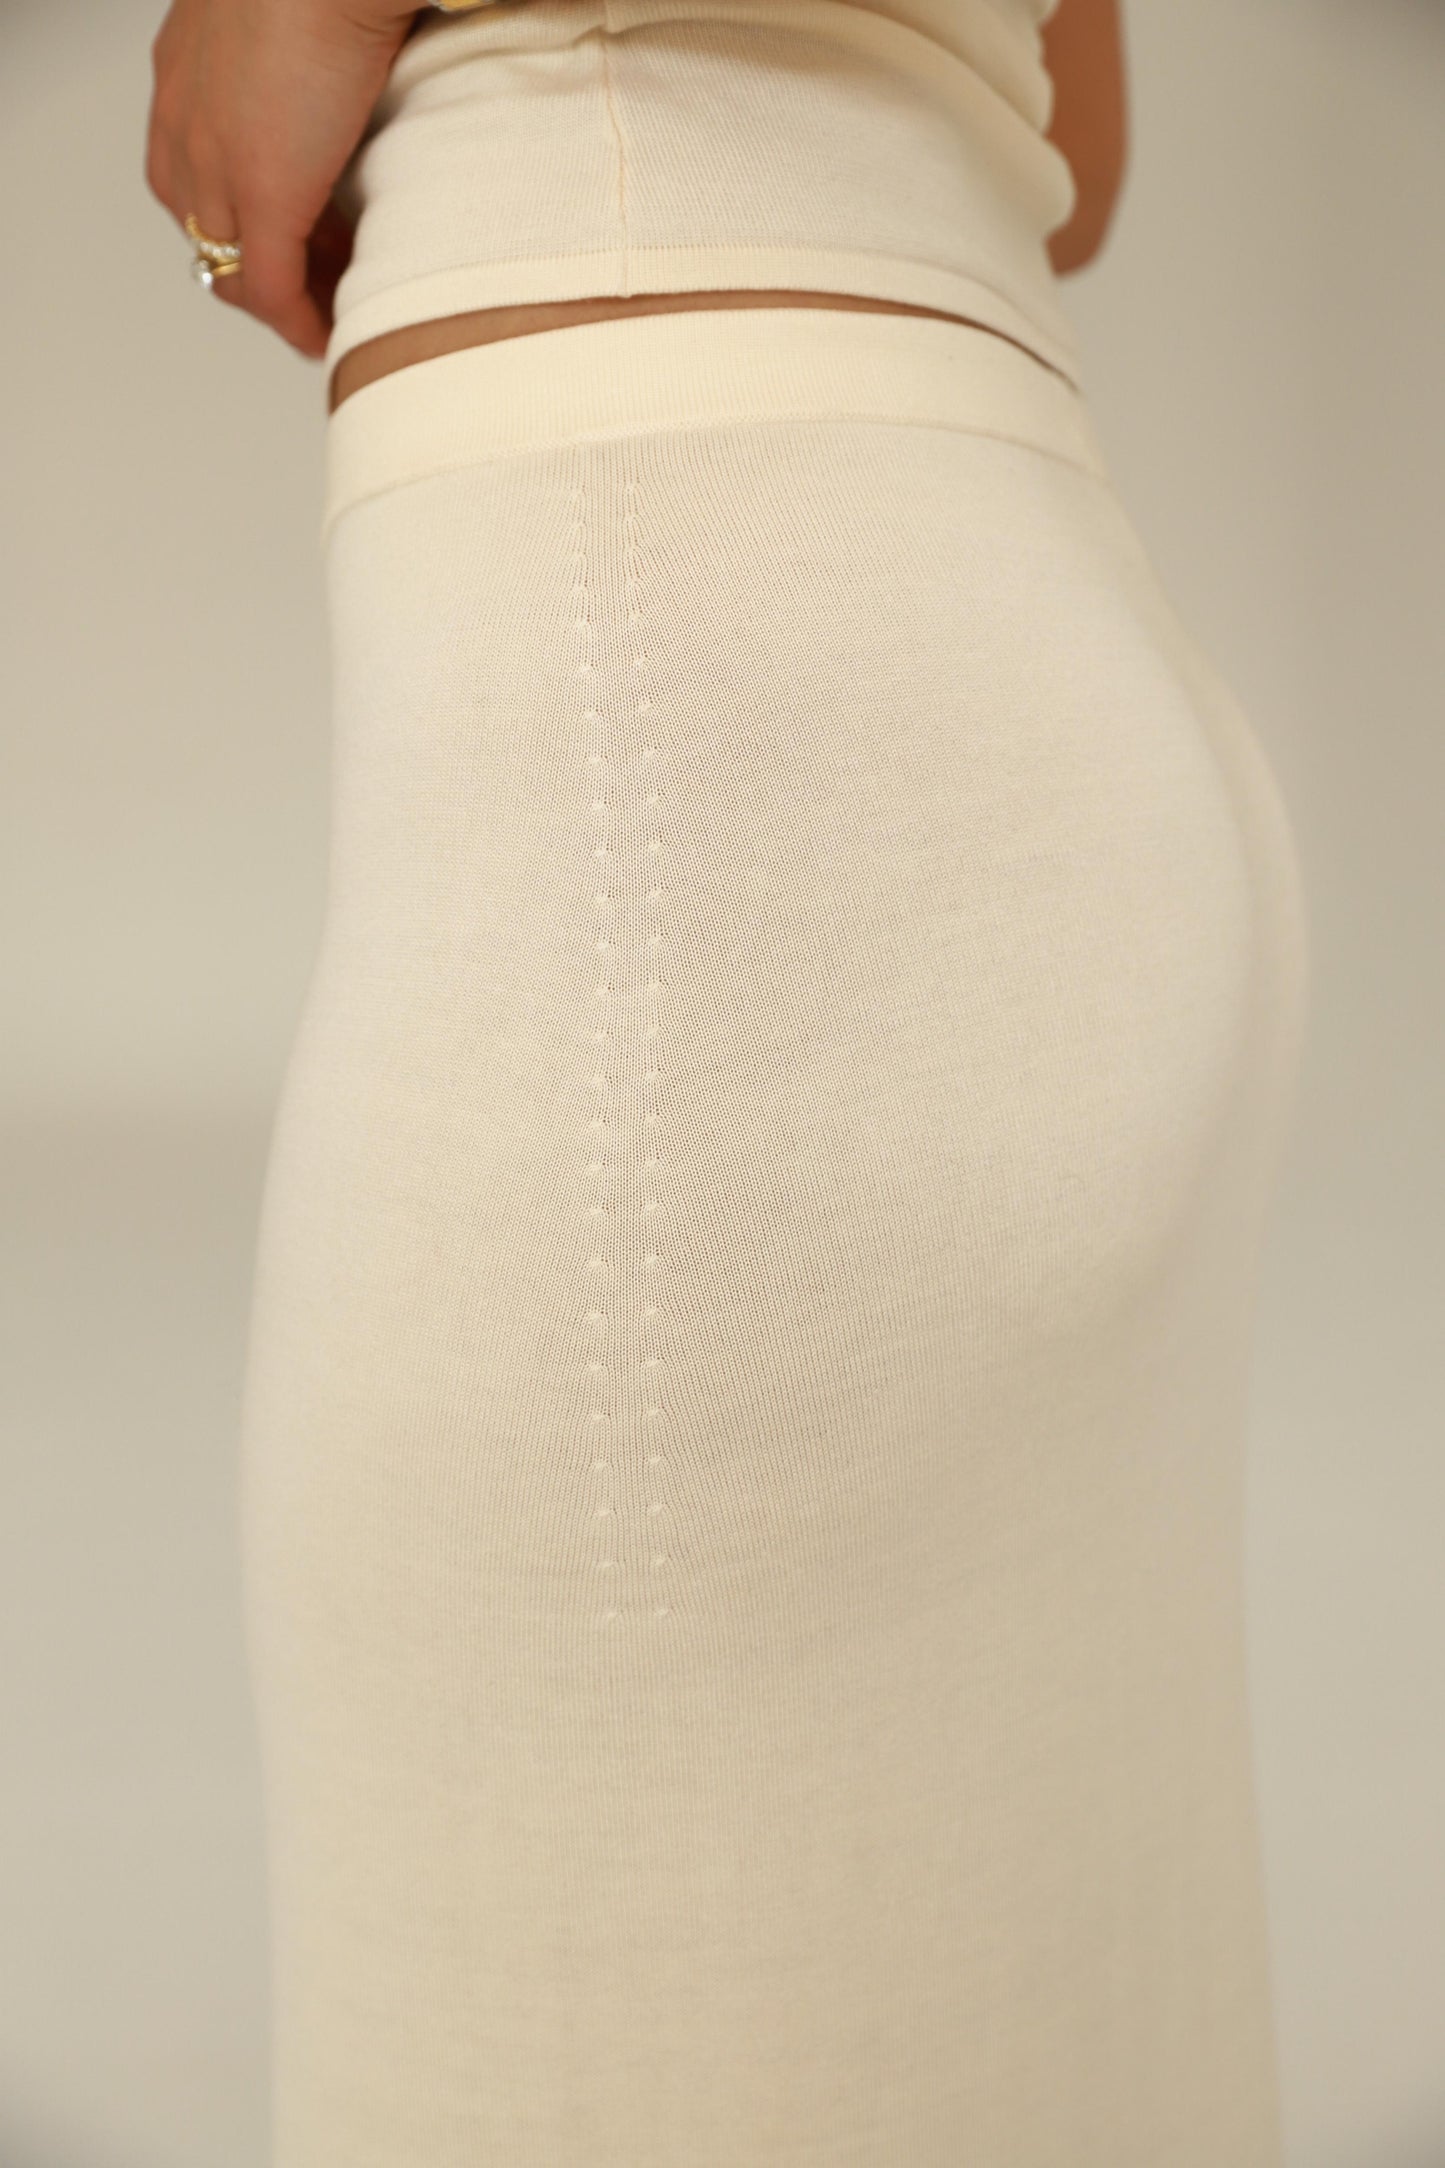 Jasmine Skirt